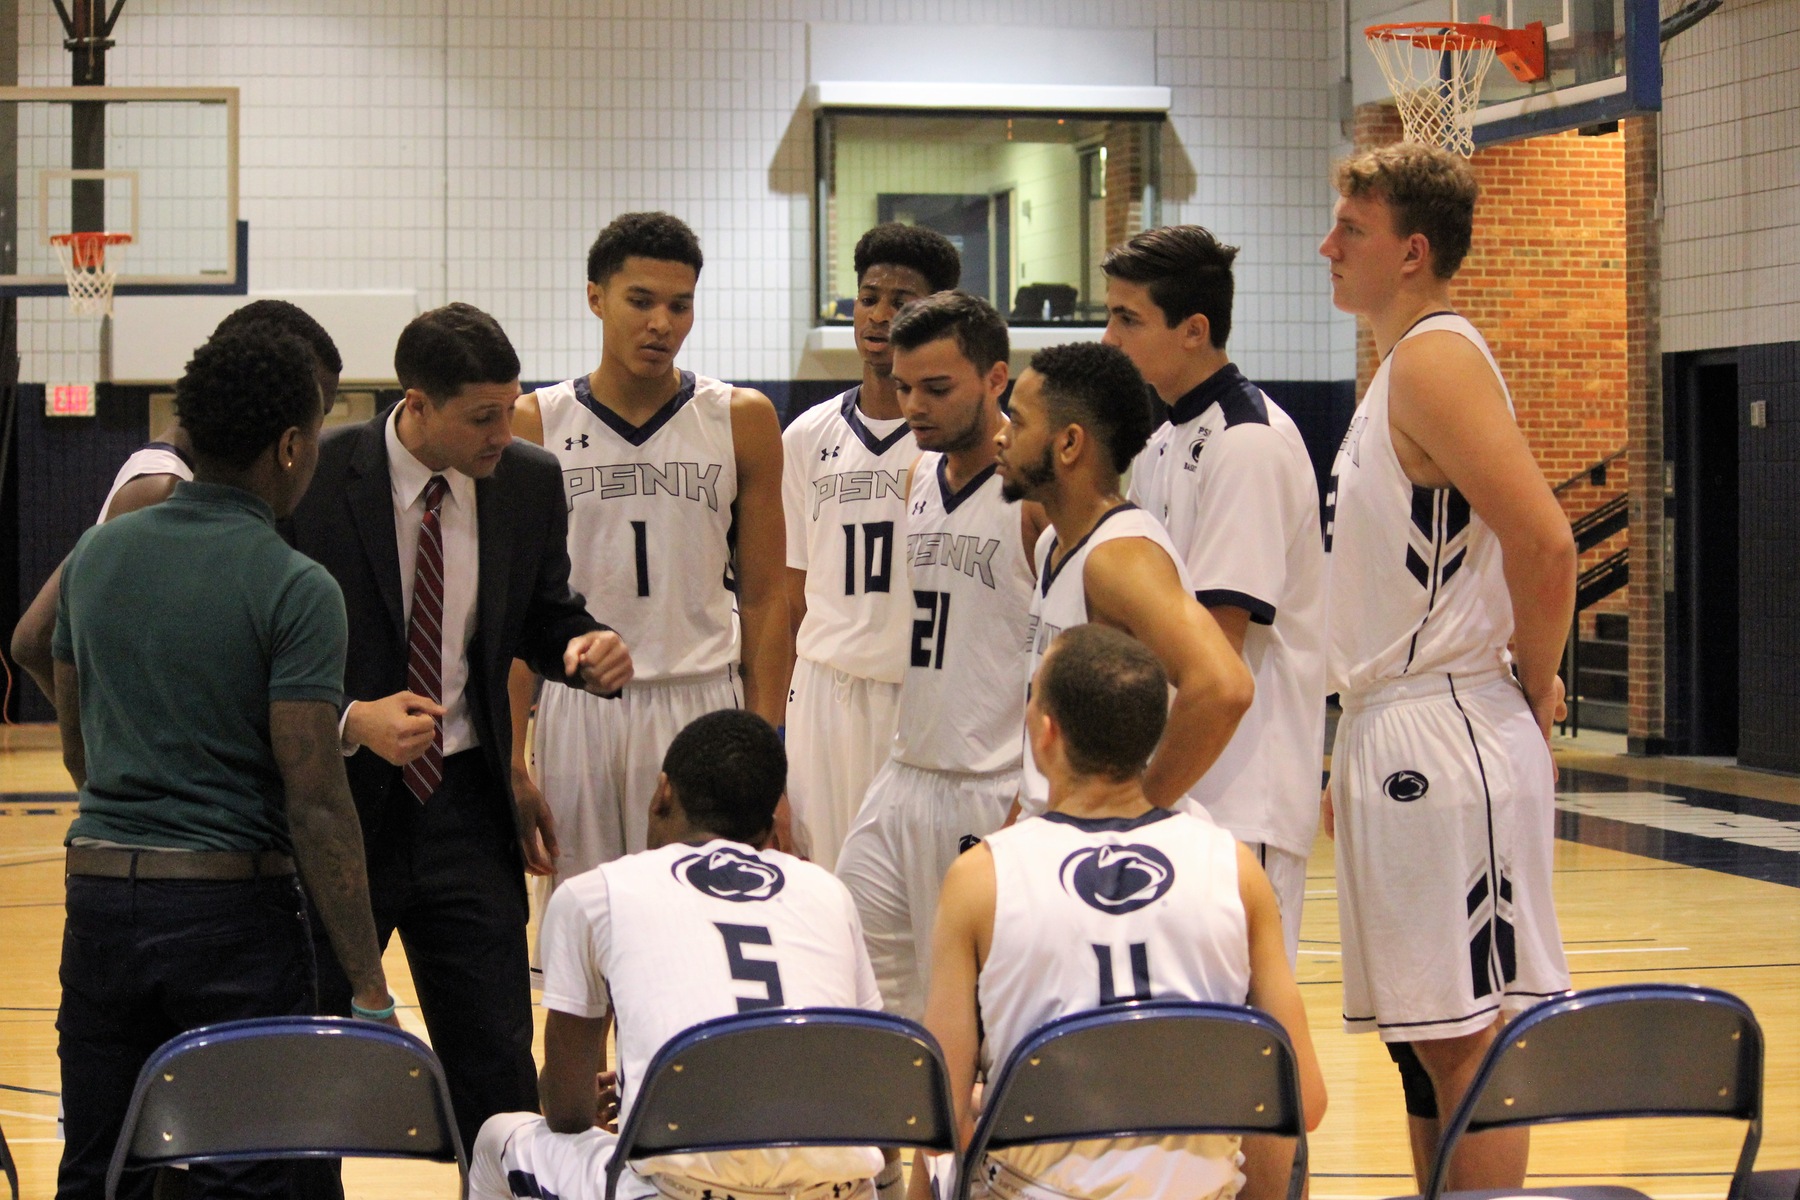 Lehigh Valley Tops New Kensington in PSUAC Men's Basketball